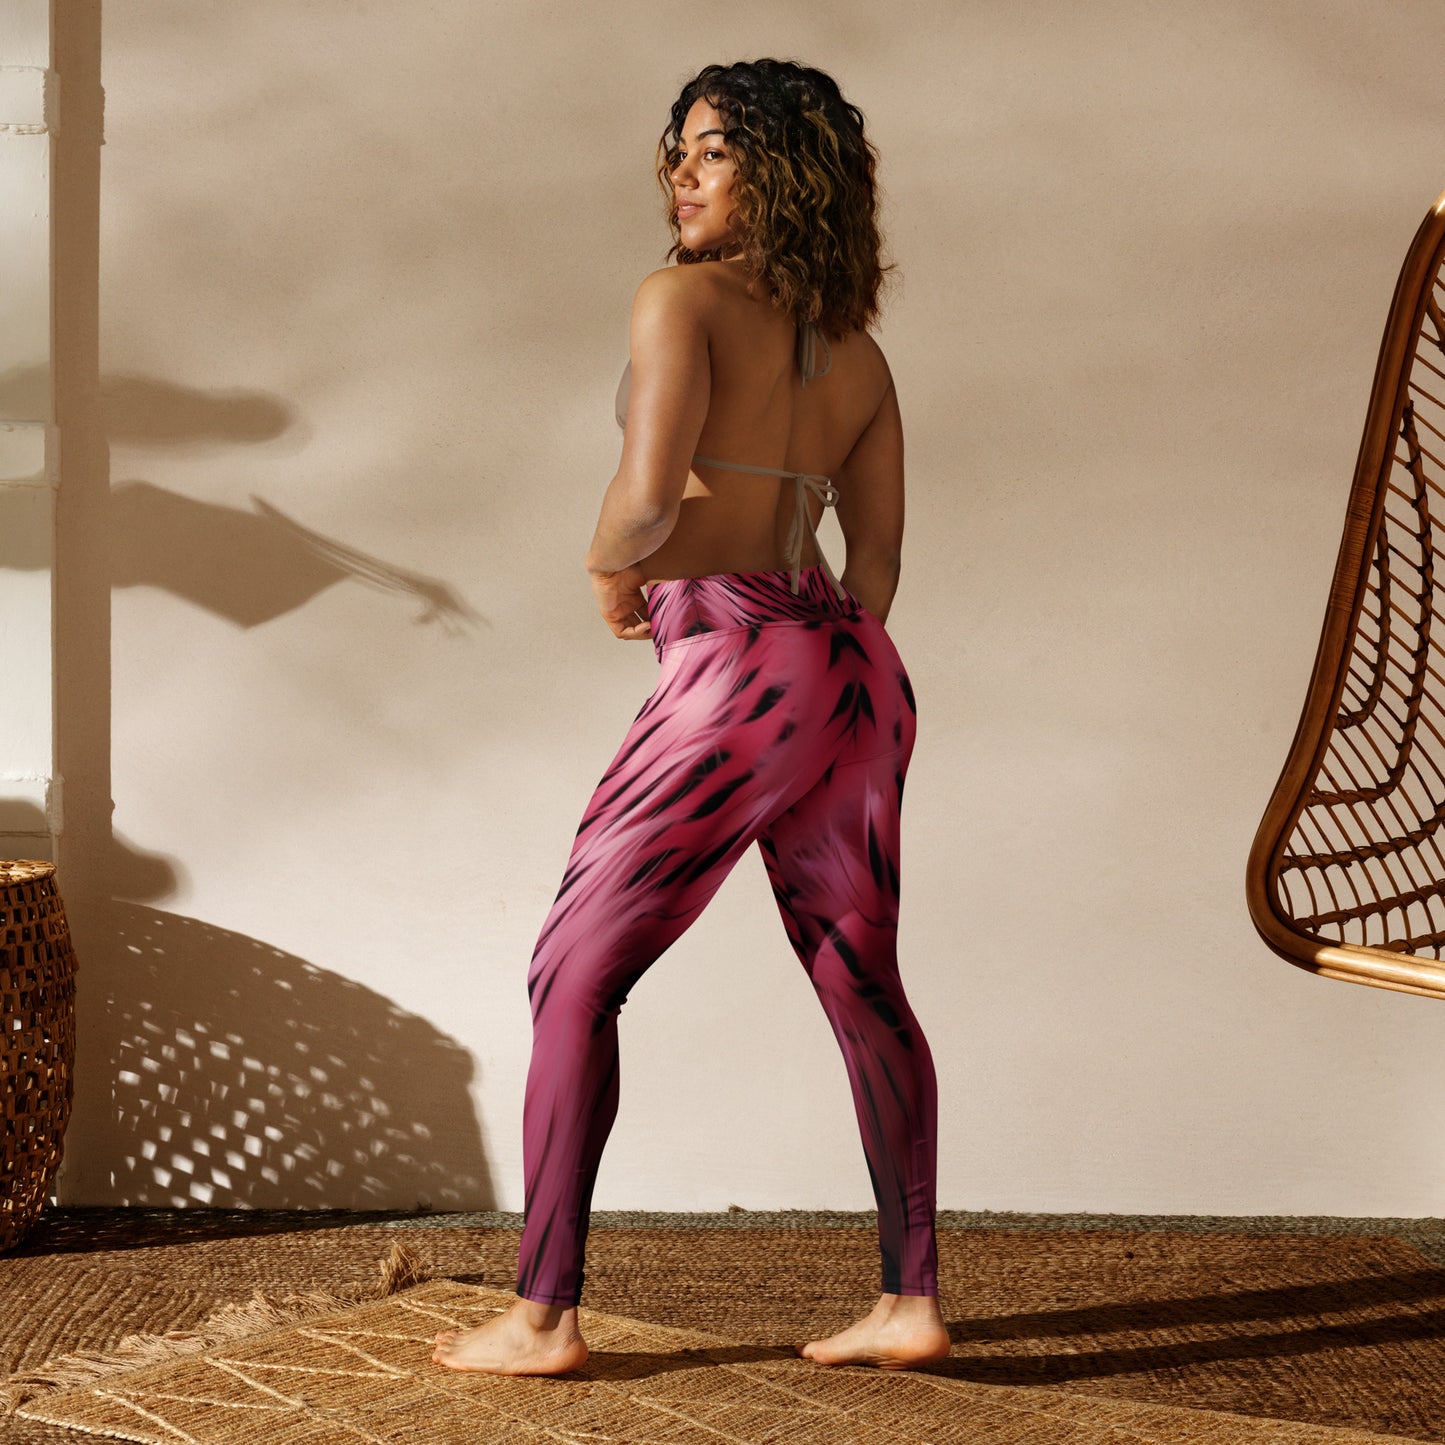 Pink and Black Striped Fur Print Yoga Leggings For Women